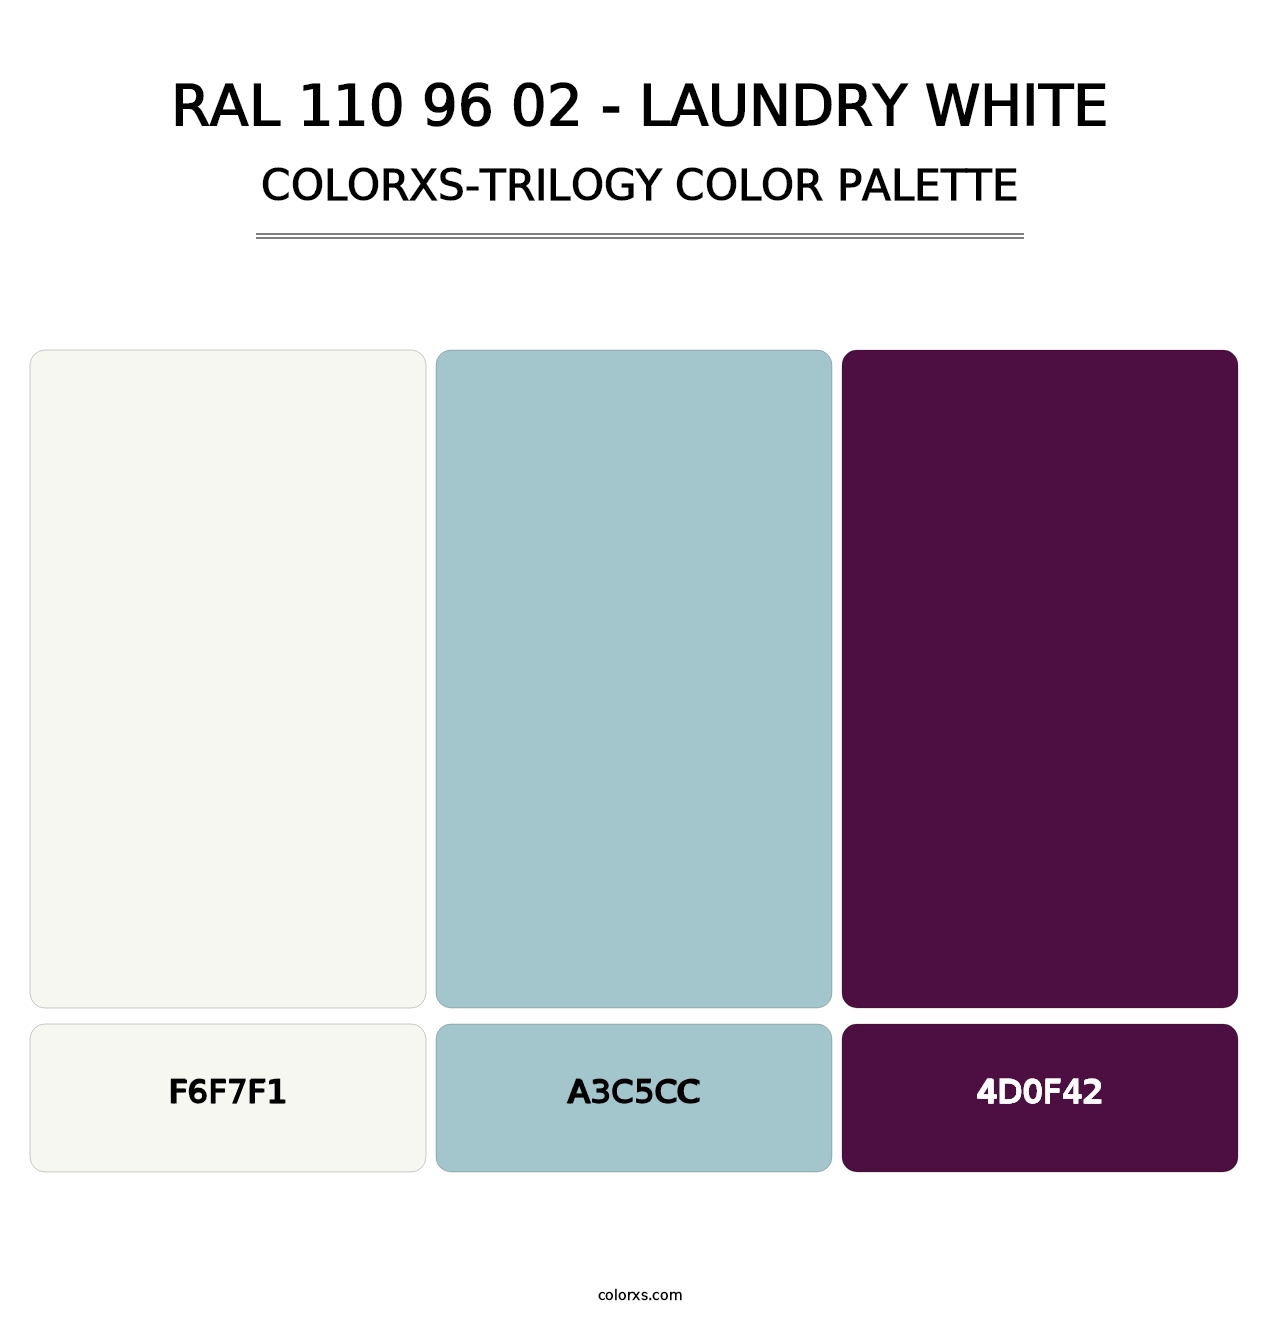 RAL 110 96 02 - Laundry White - Colorxs Trilogy Palette